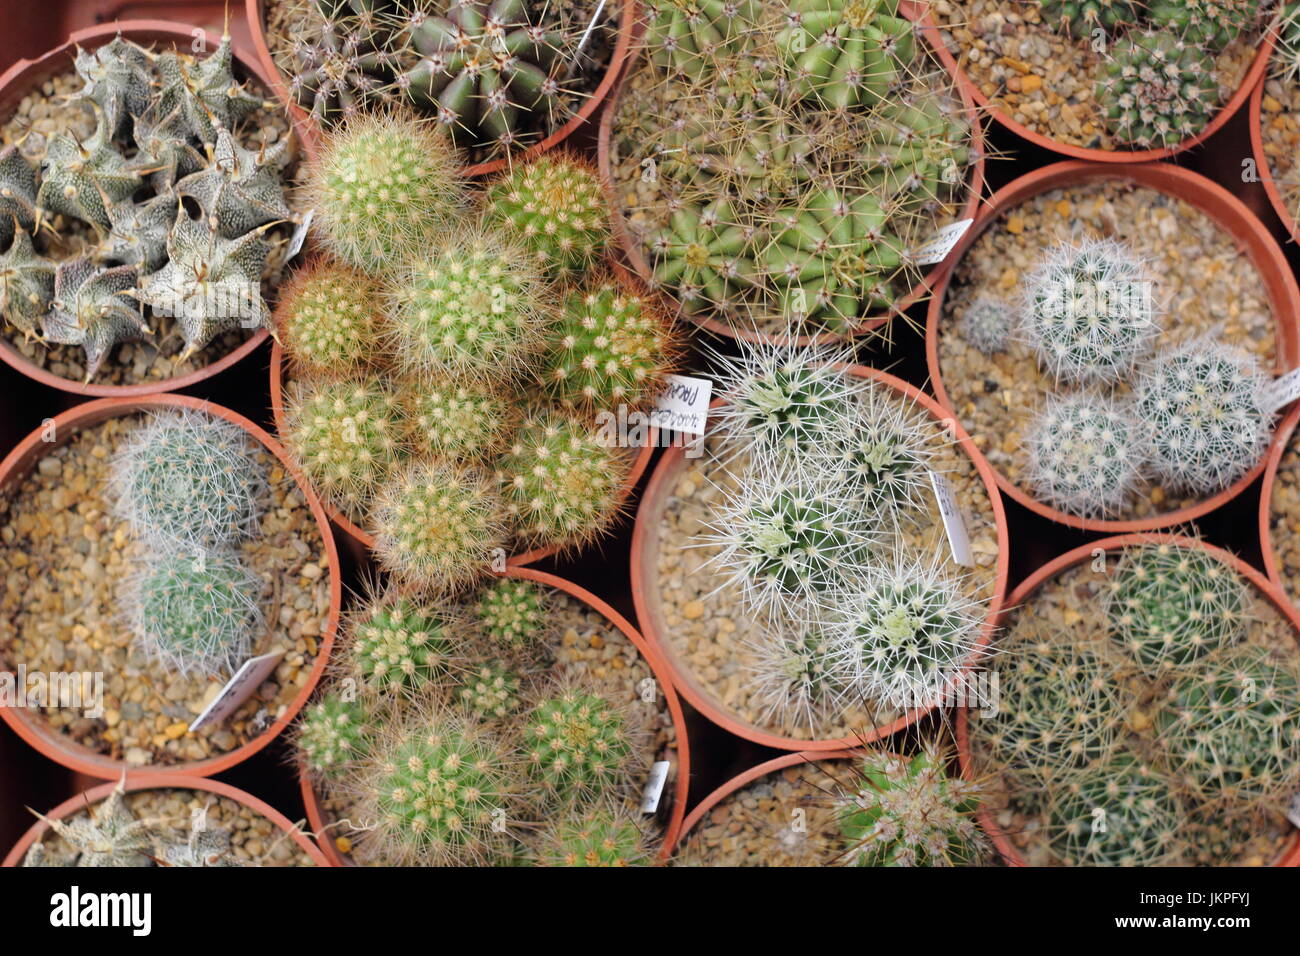 Cactus (a type of succulent) houseplants on display, Sheffield, England, UK Stock Photo